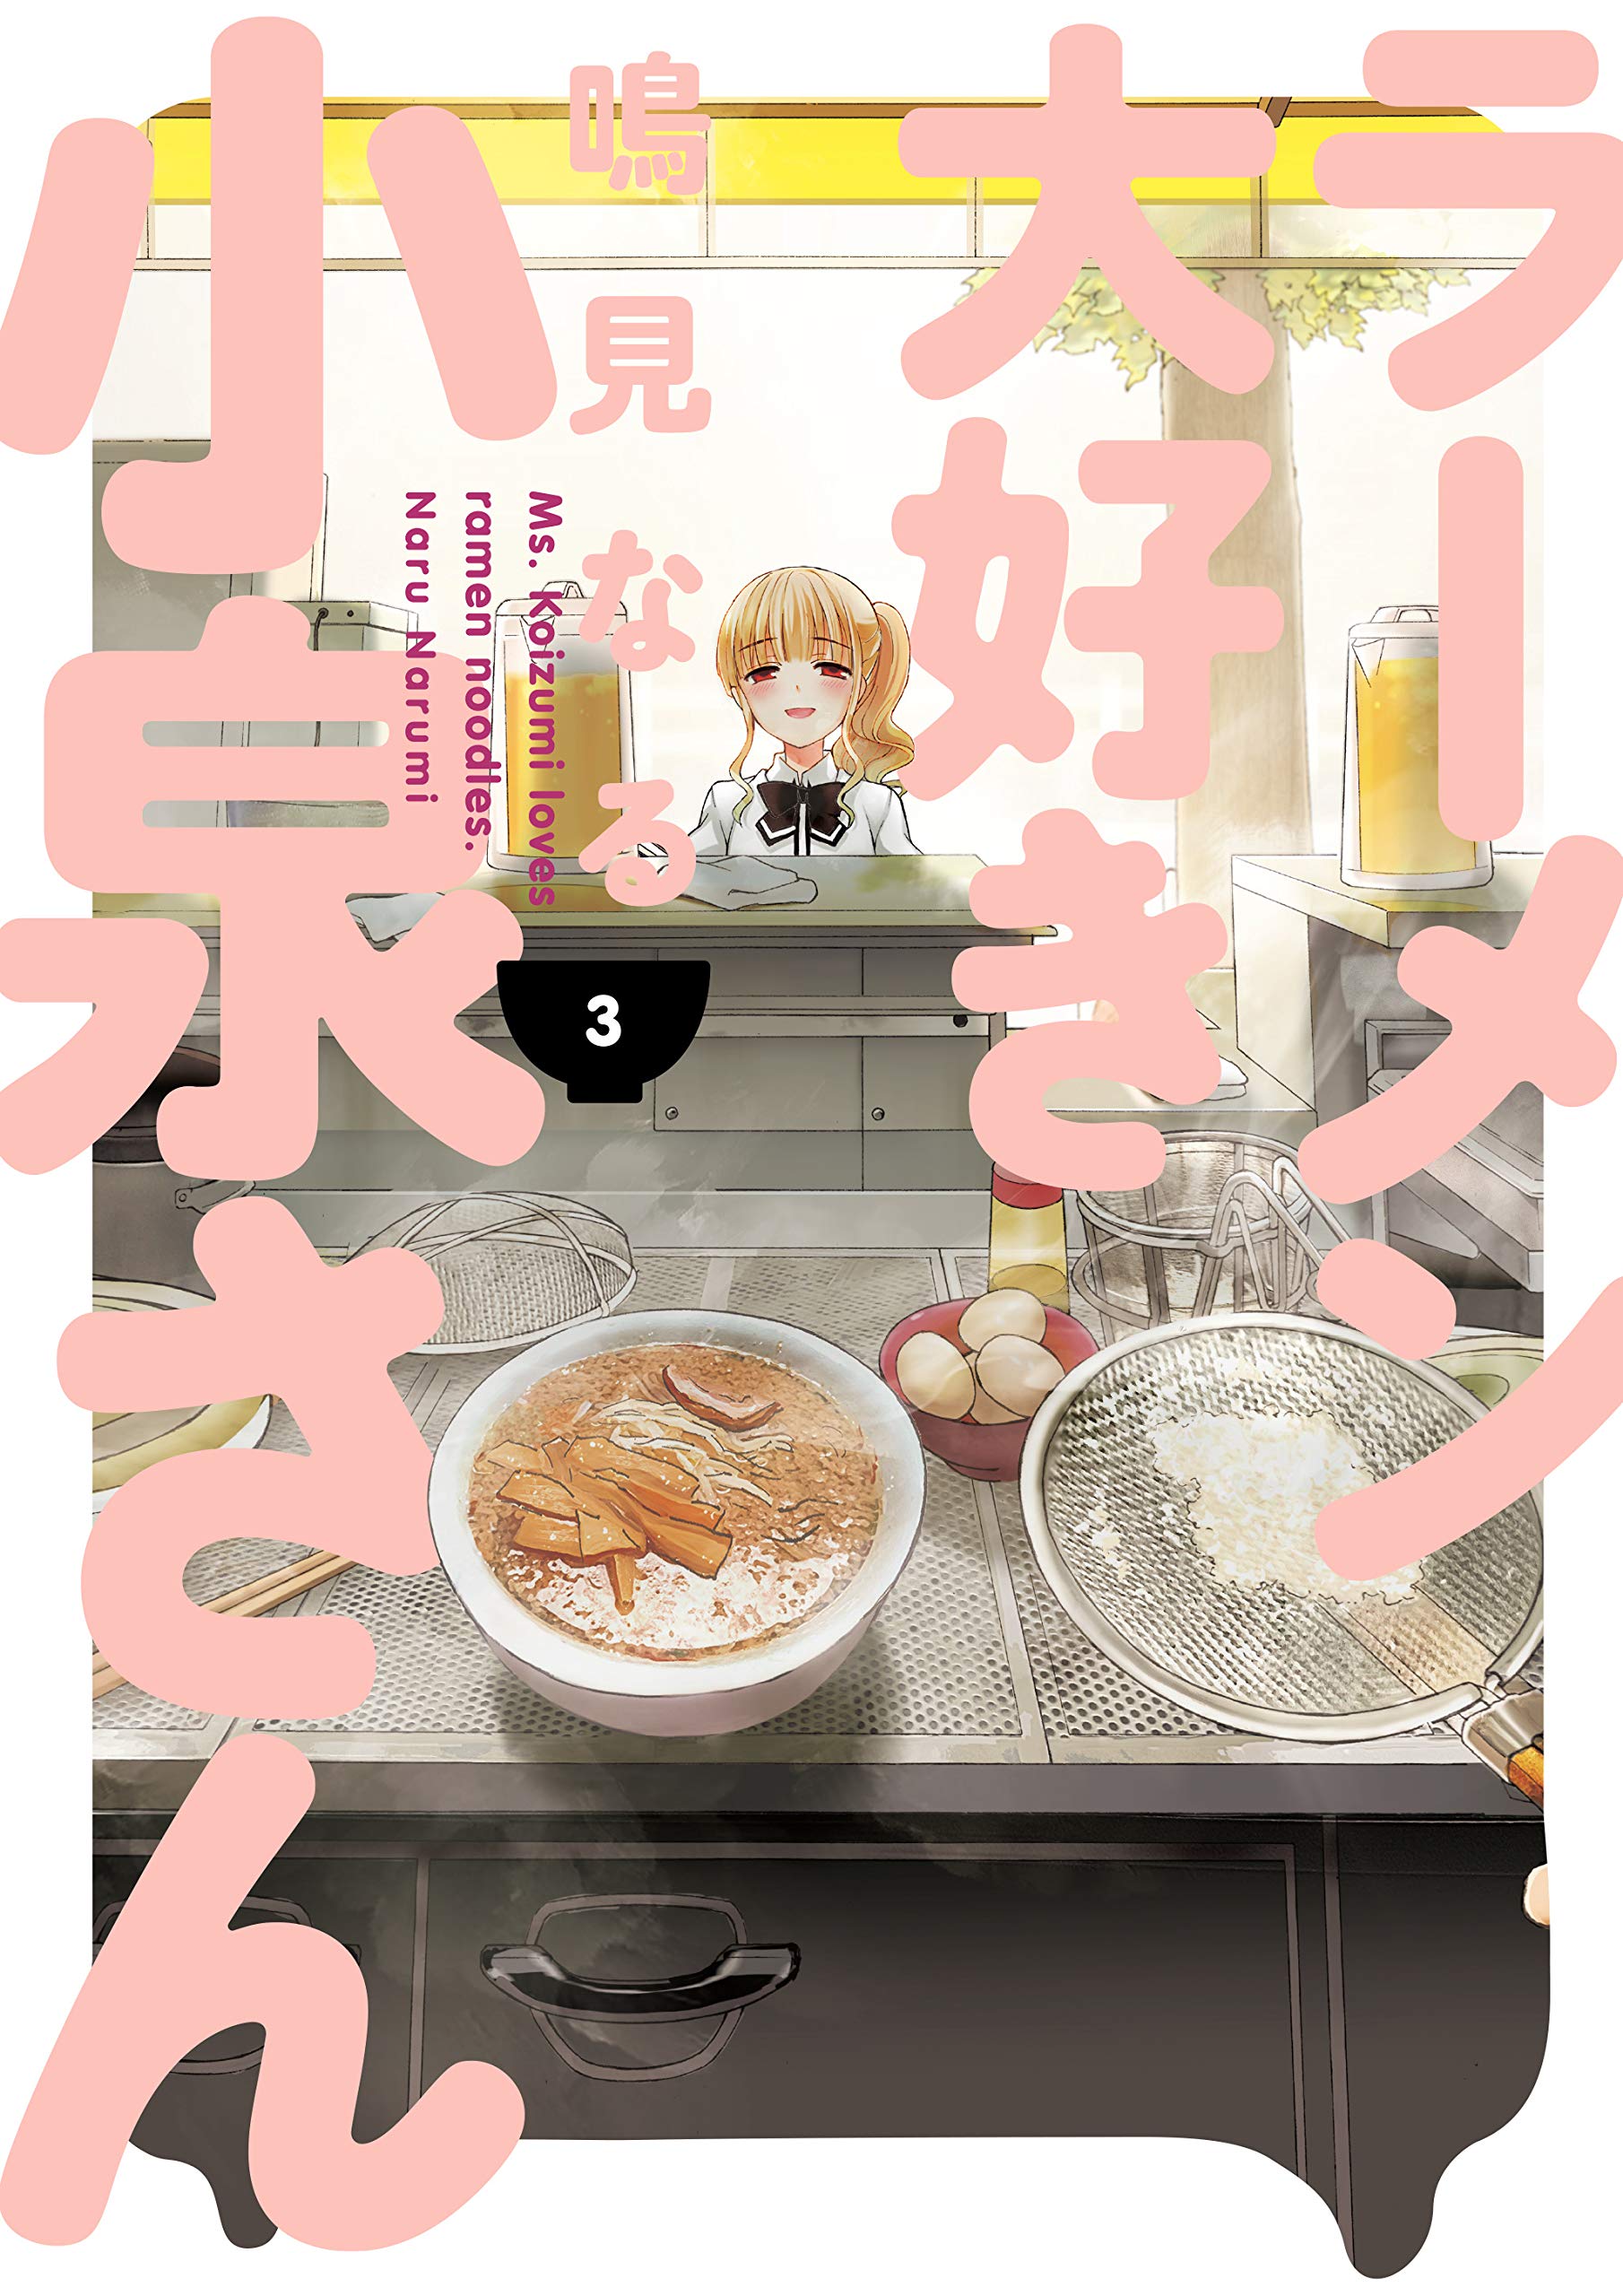 Ms. Koizumi Loves Ramen Noodles - Volume 3